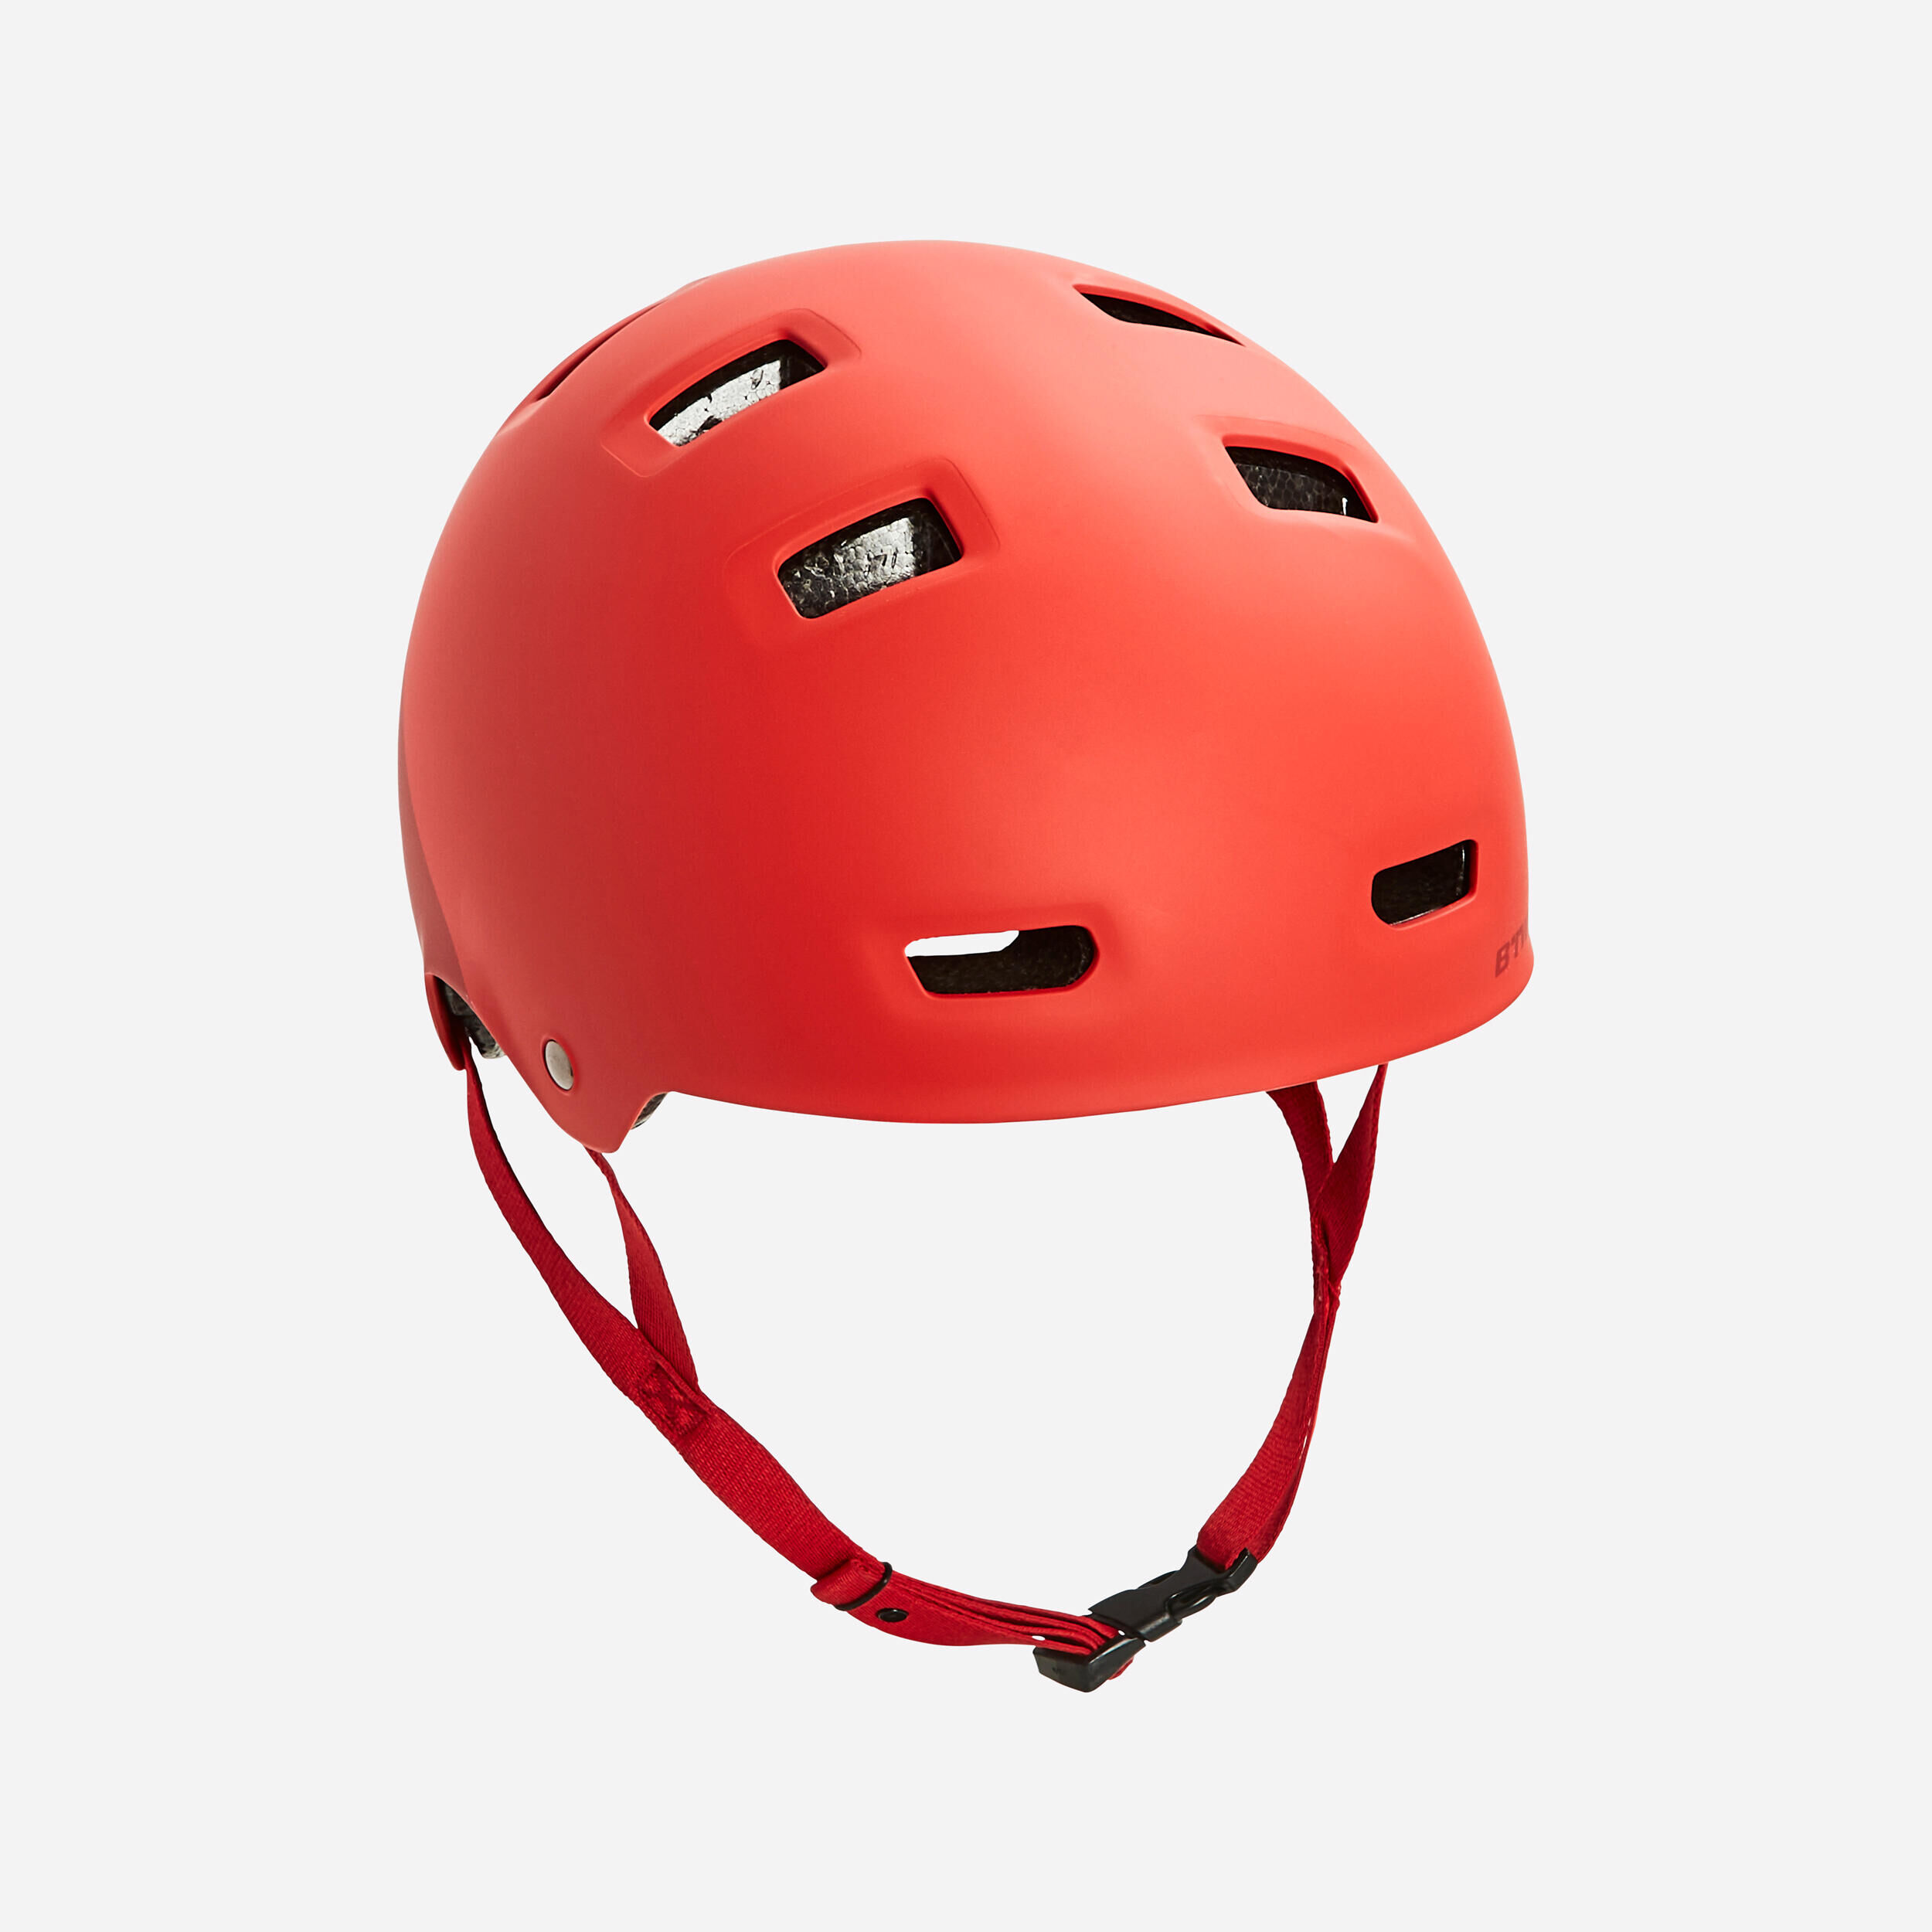 BTWIN Kids' Cycling Helmet Teen 520 - Red